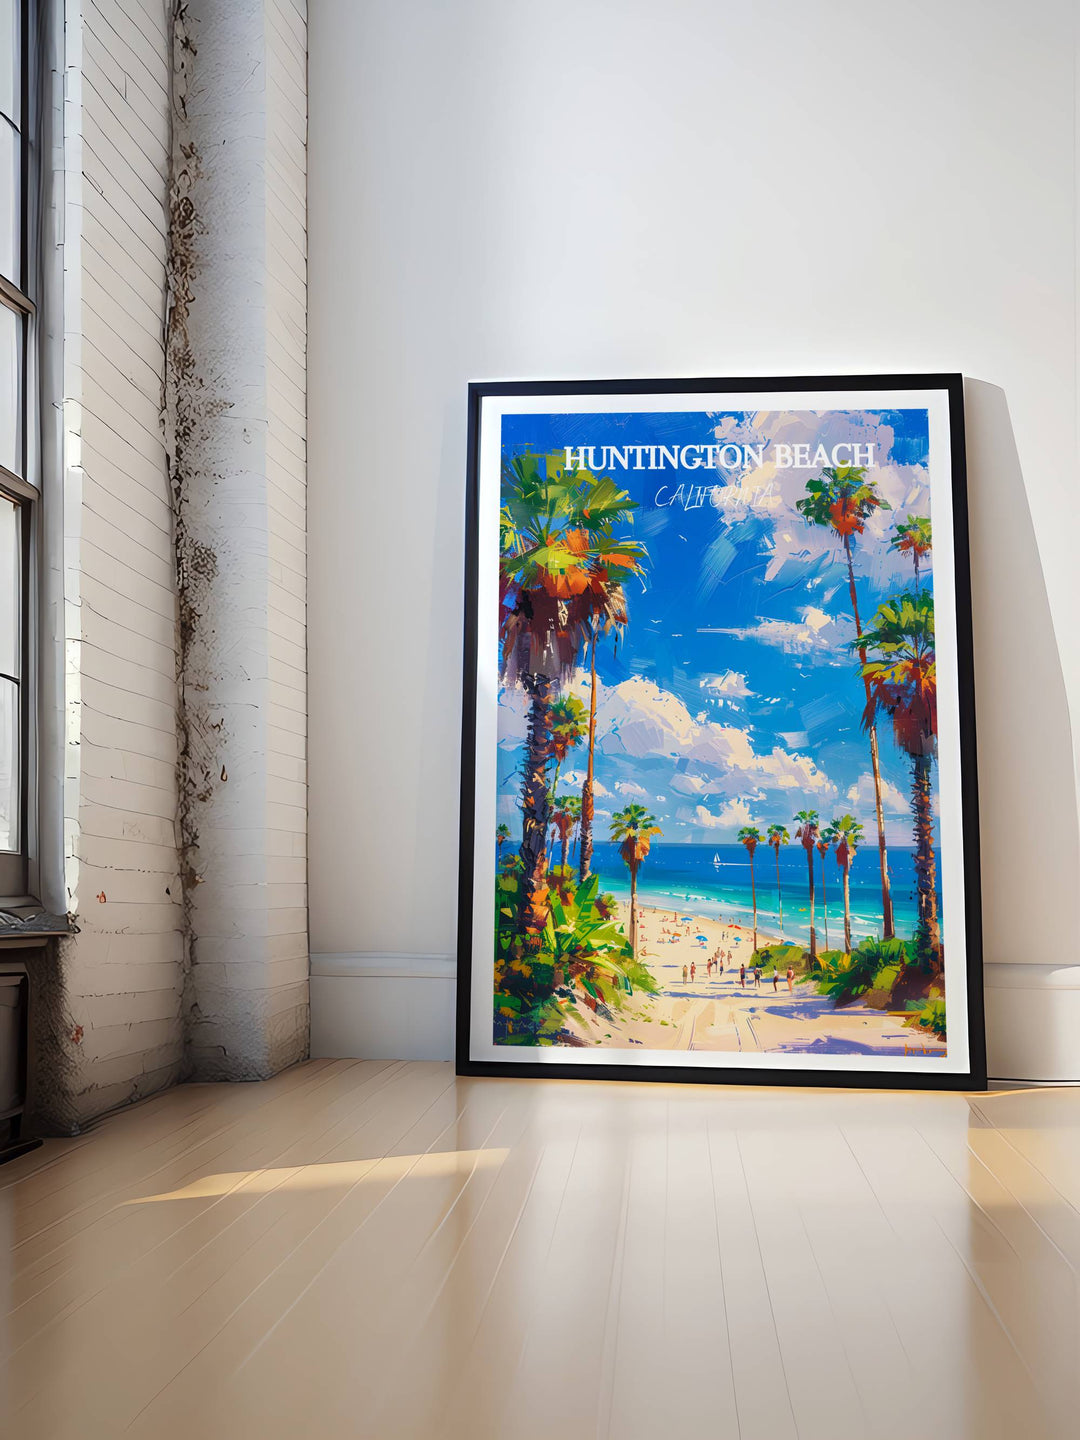 Huntington Beach Art Print - California Travel Print